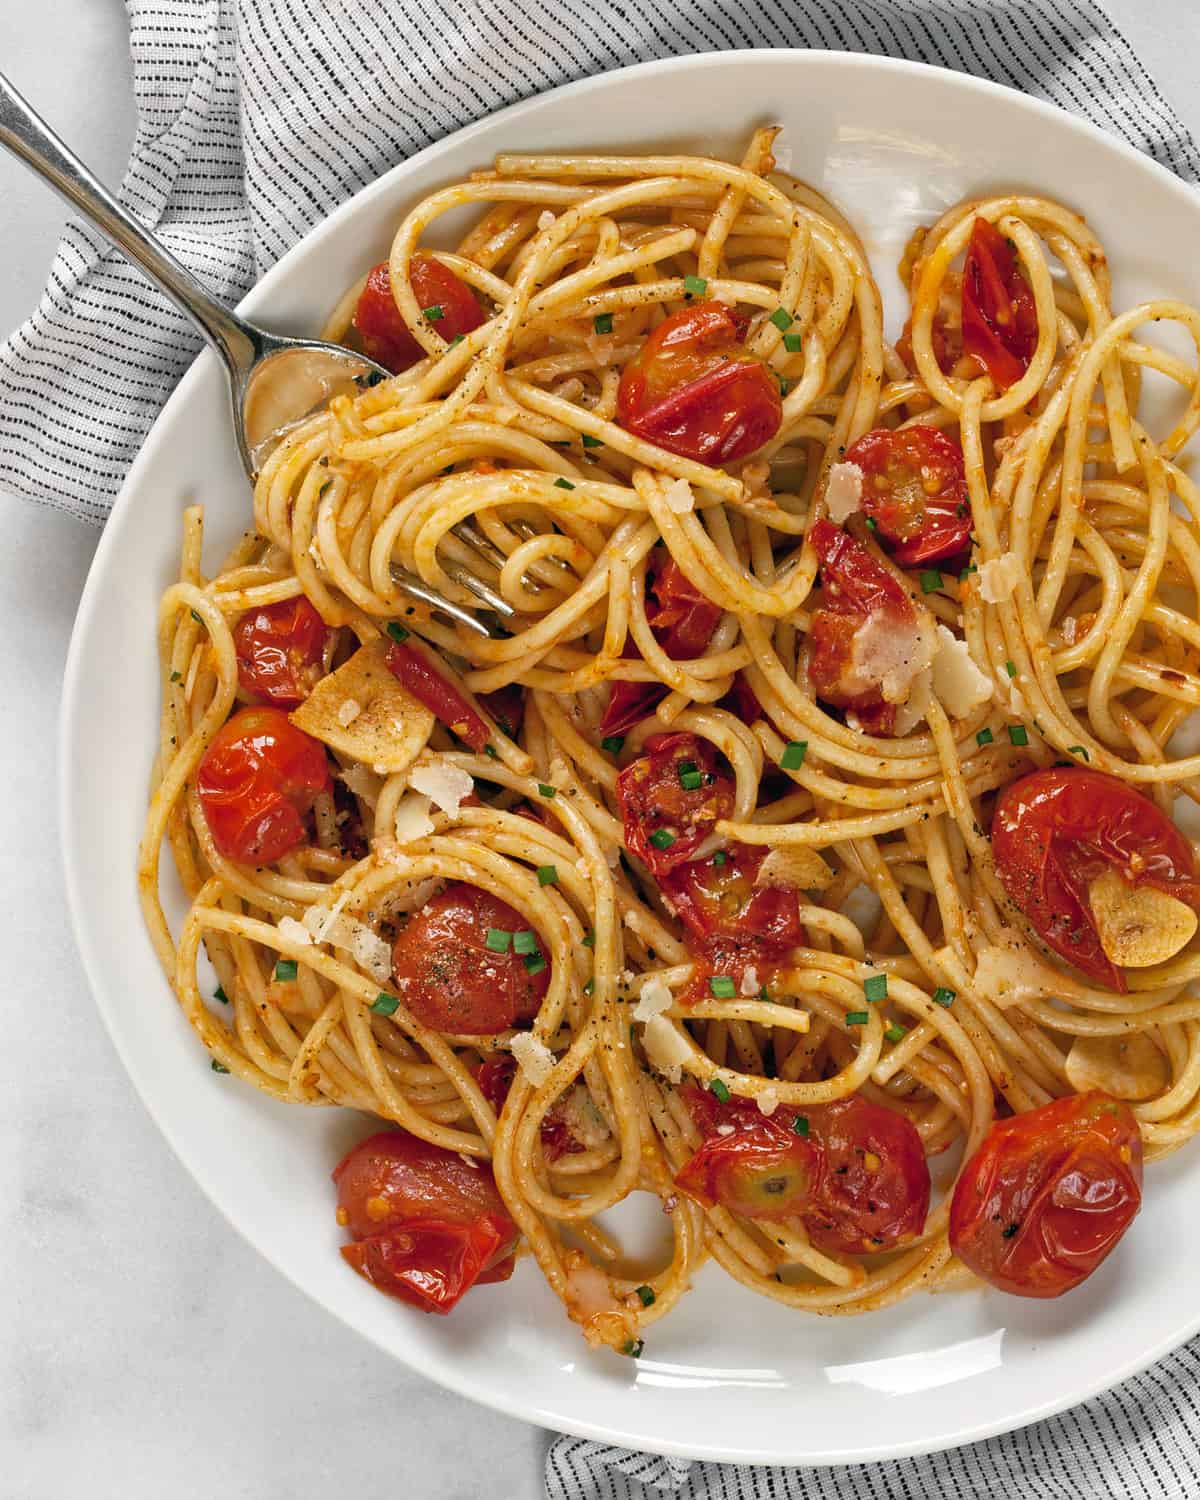 Cherry tomato pasta on a plate.